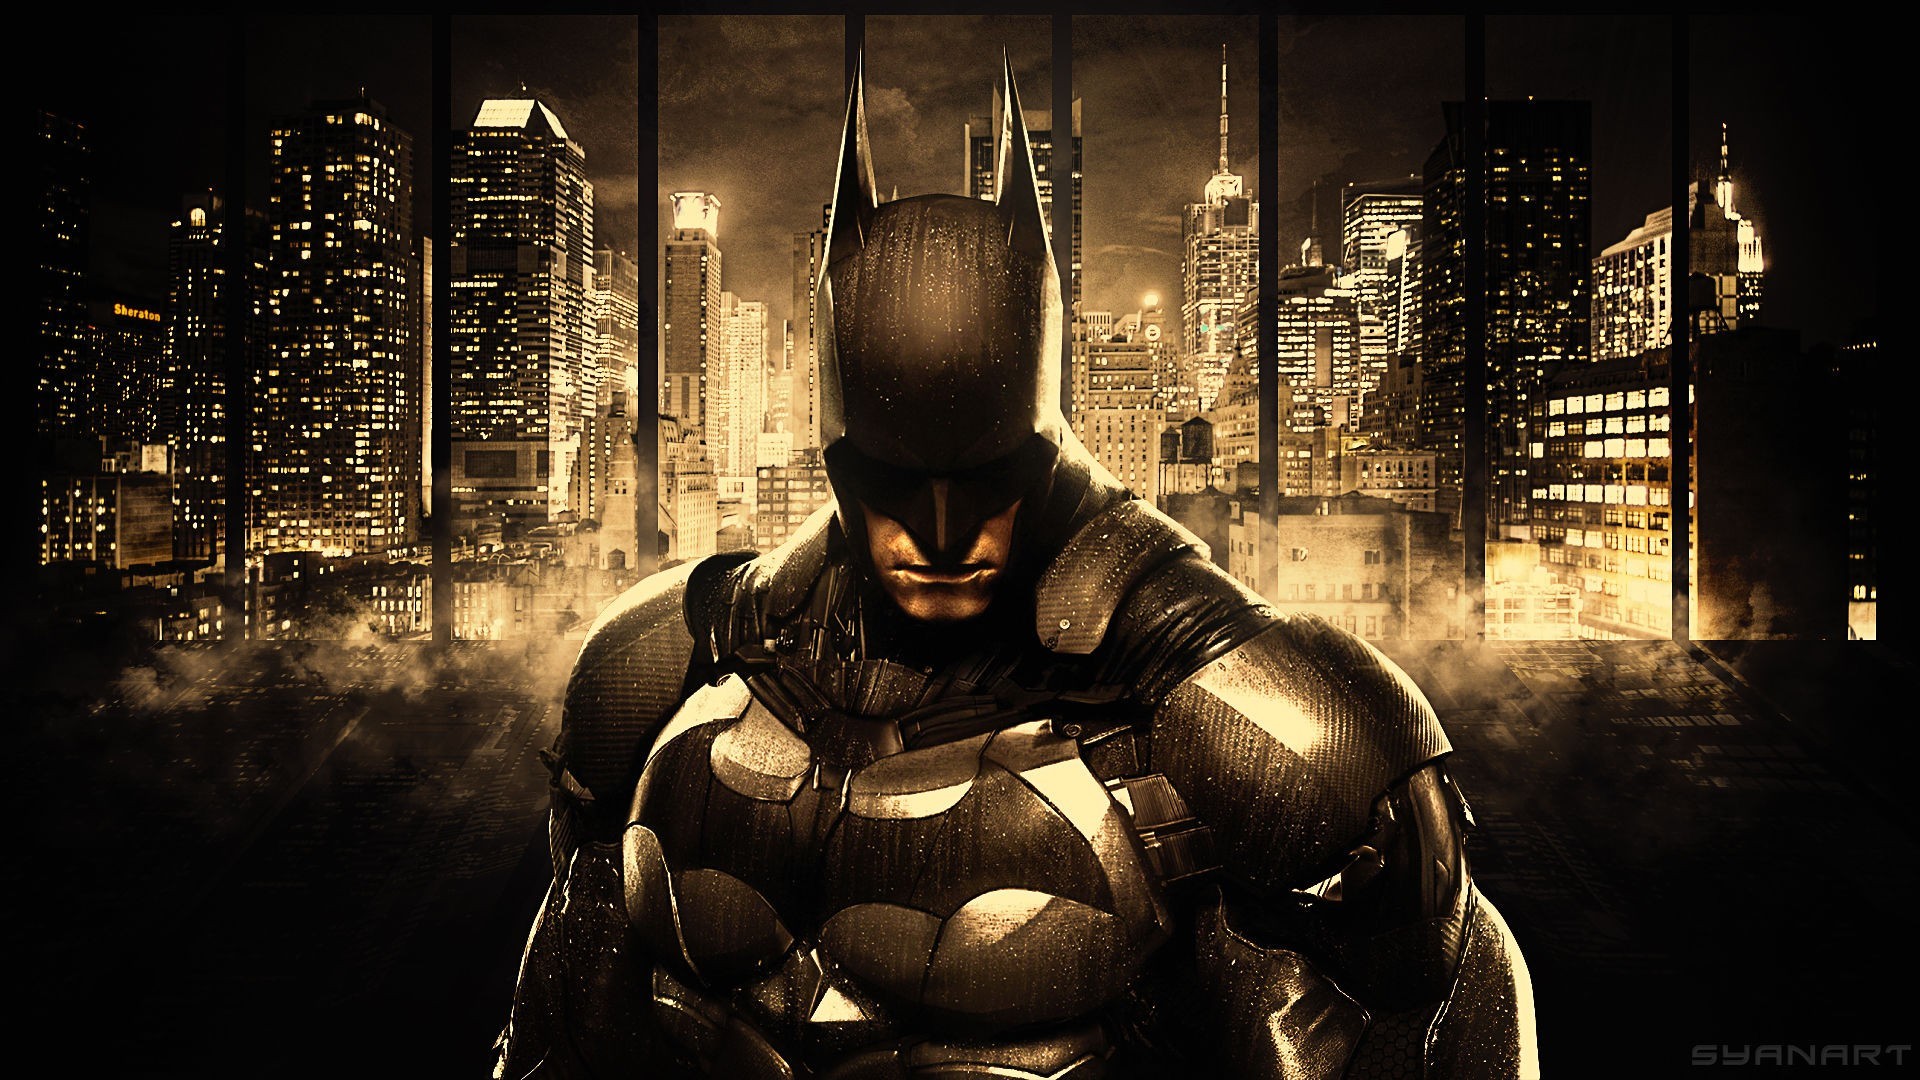 1920x1080 Darkness, Batman Arkham Origins, Scarecrow, Batman, Batman Arkham Knight  Full HD, HDTV, 1080p 16:9 Wallpaper in 